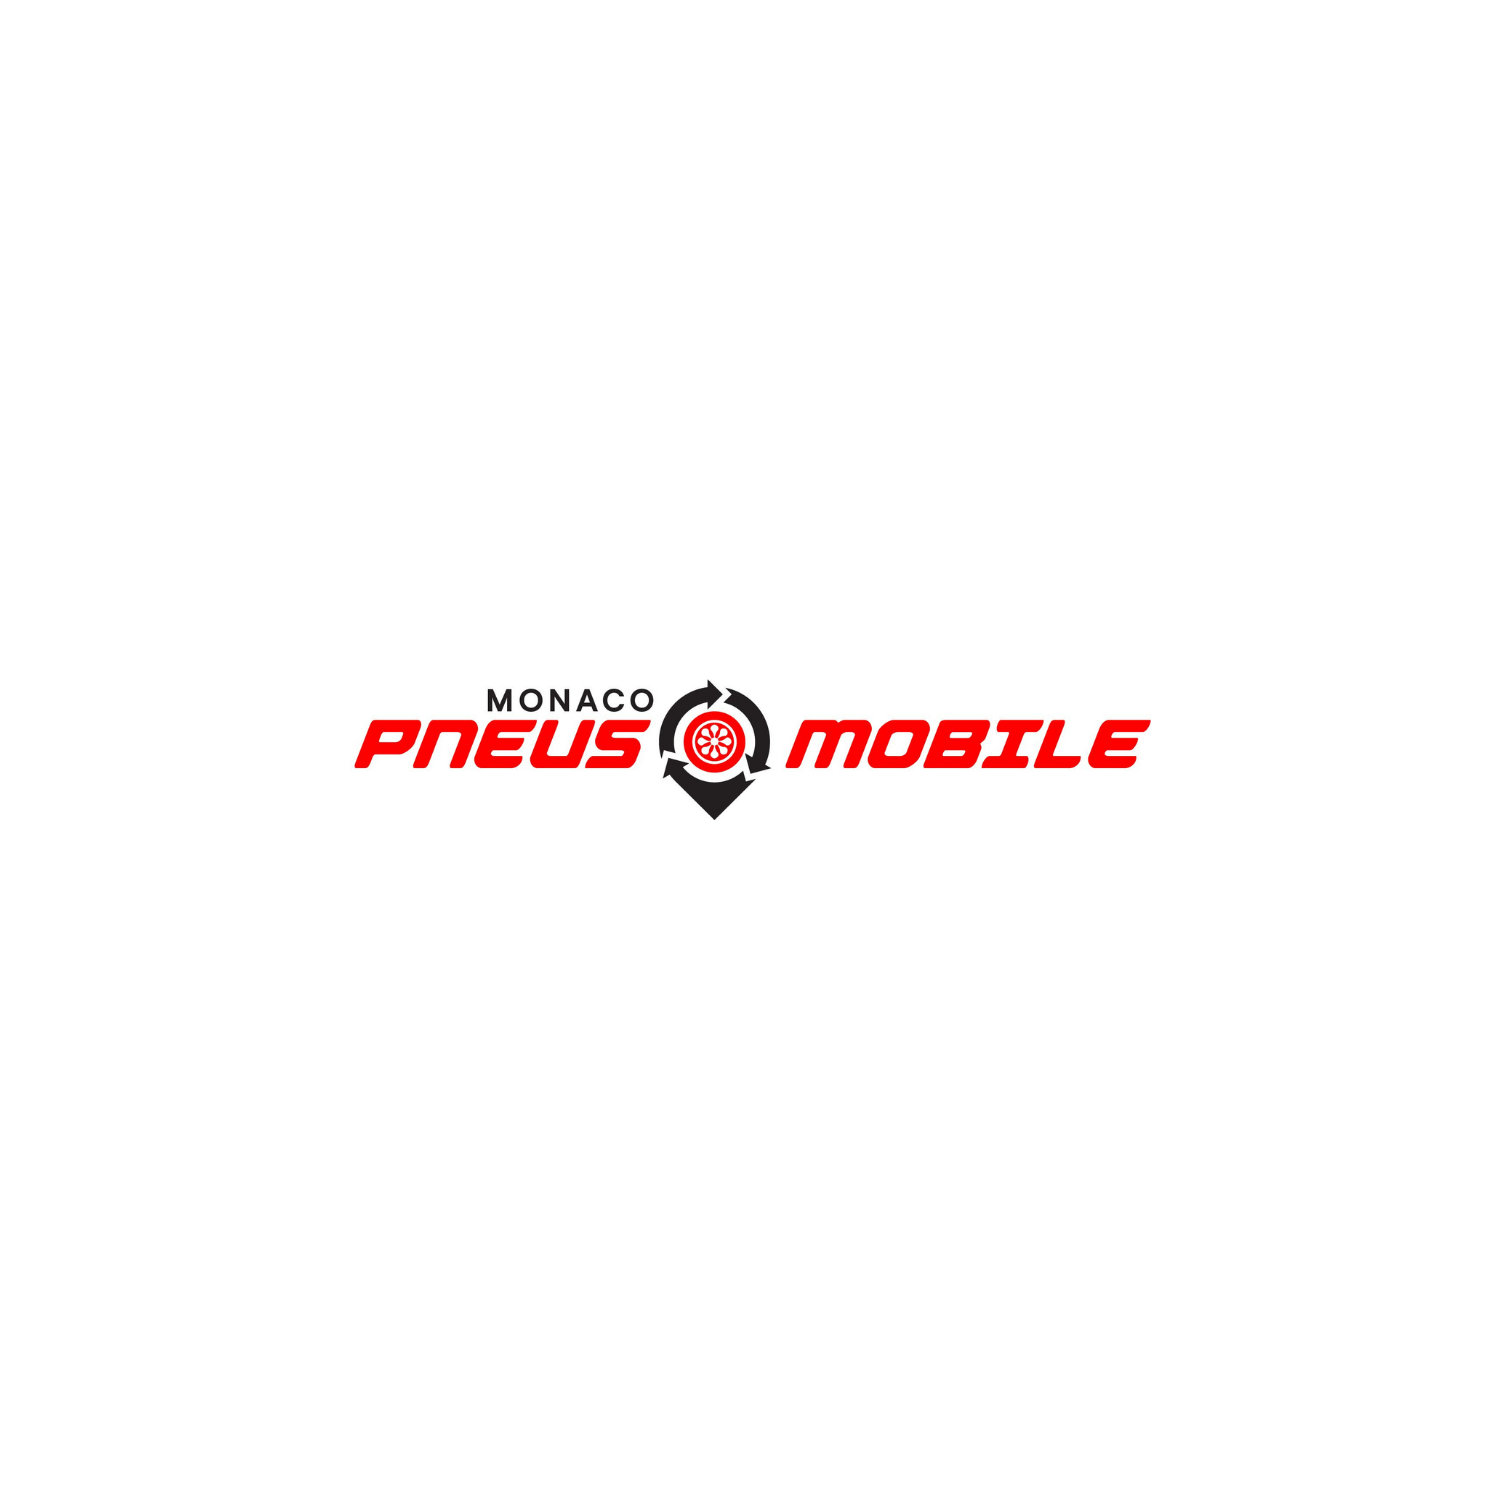 monaco-pneus-mobiles-commercant-carlo-app-service